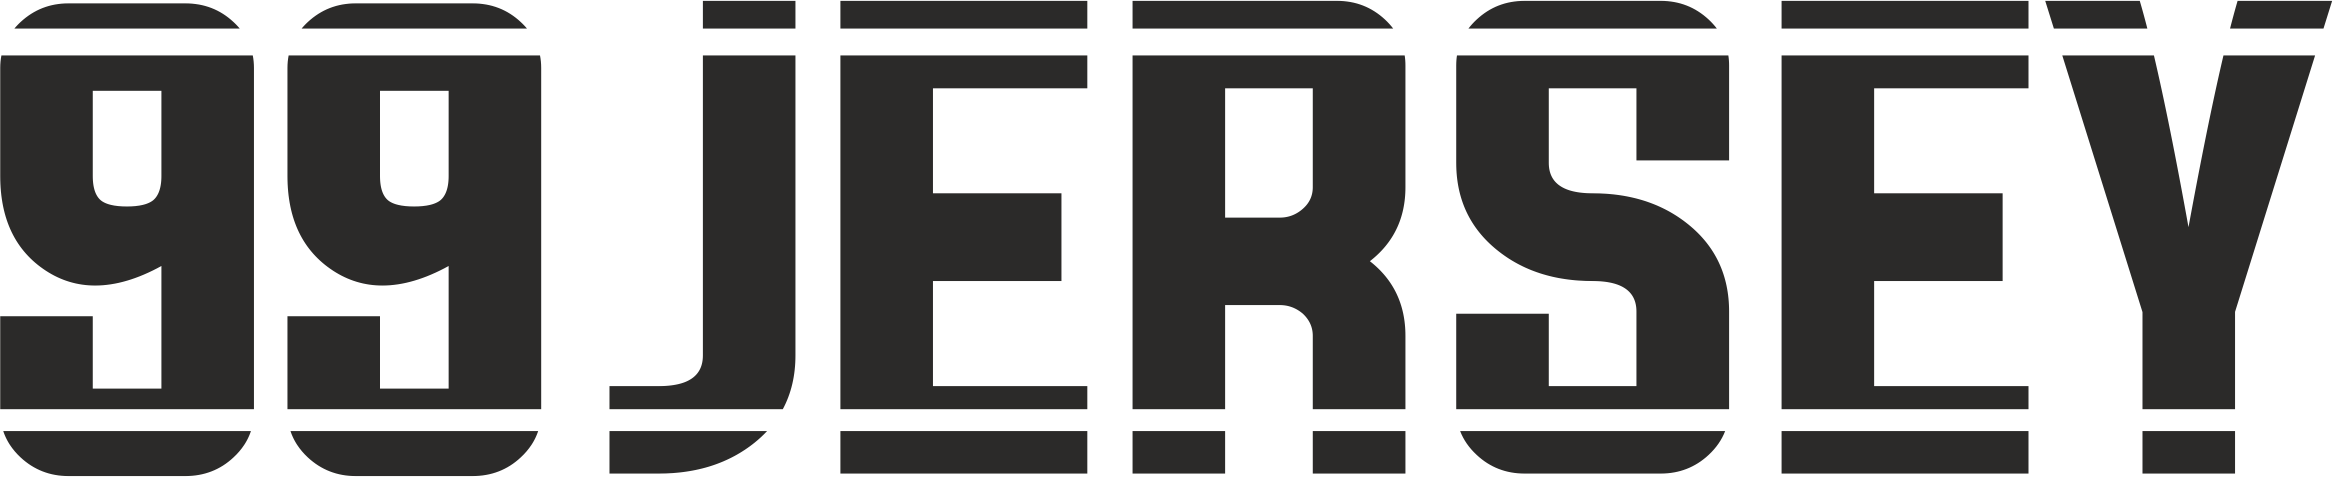 99Jersey logo